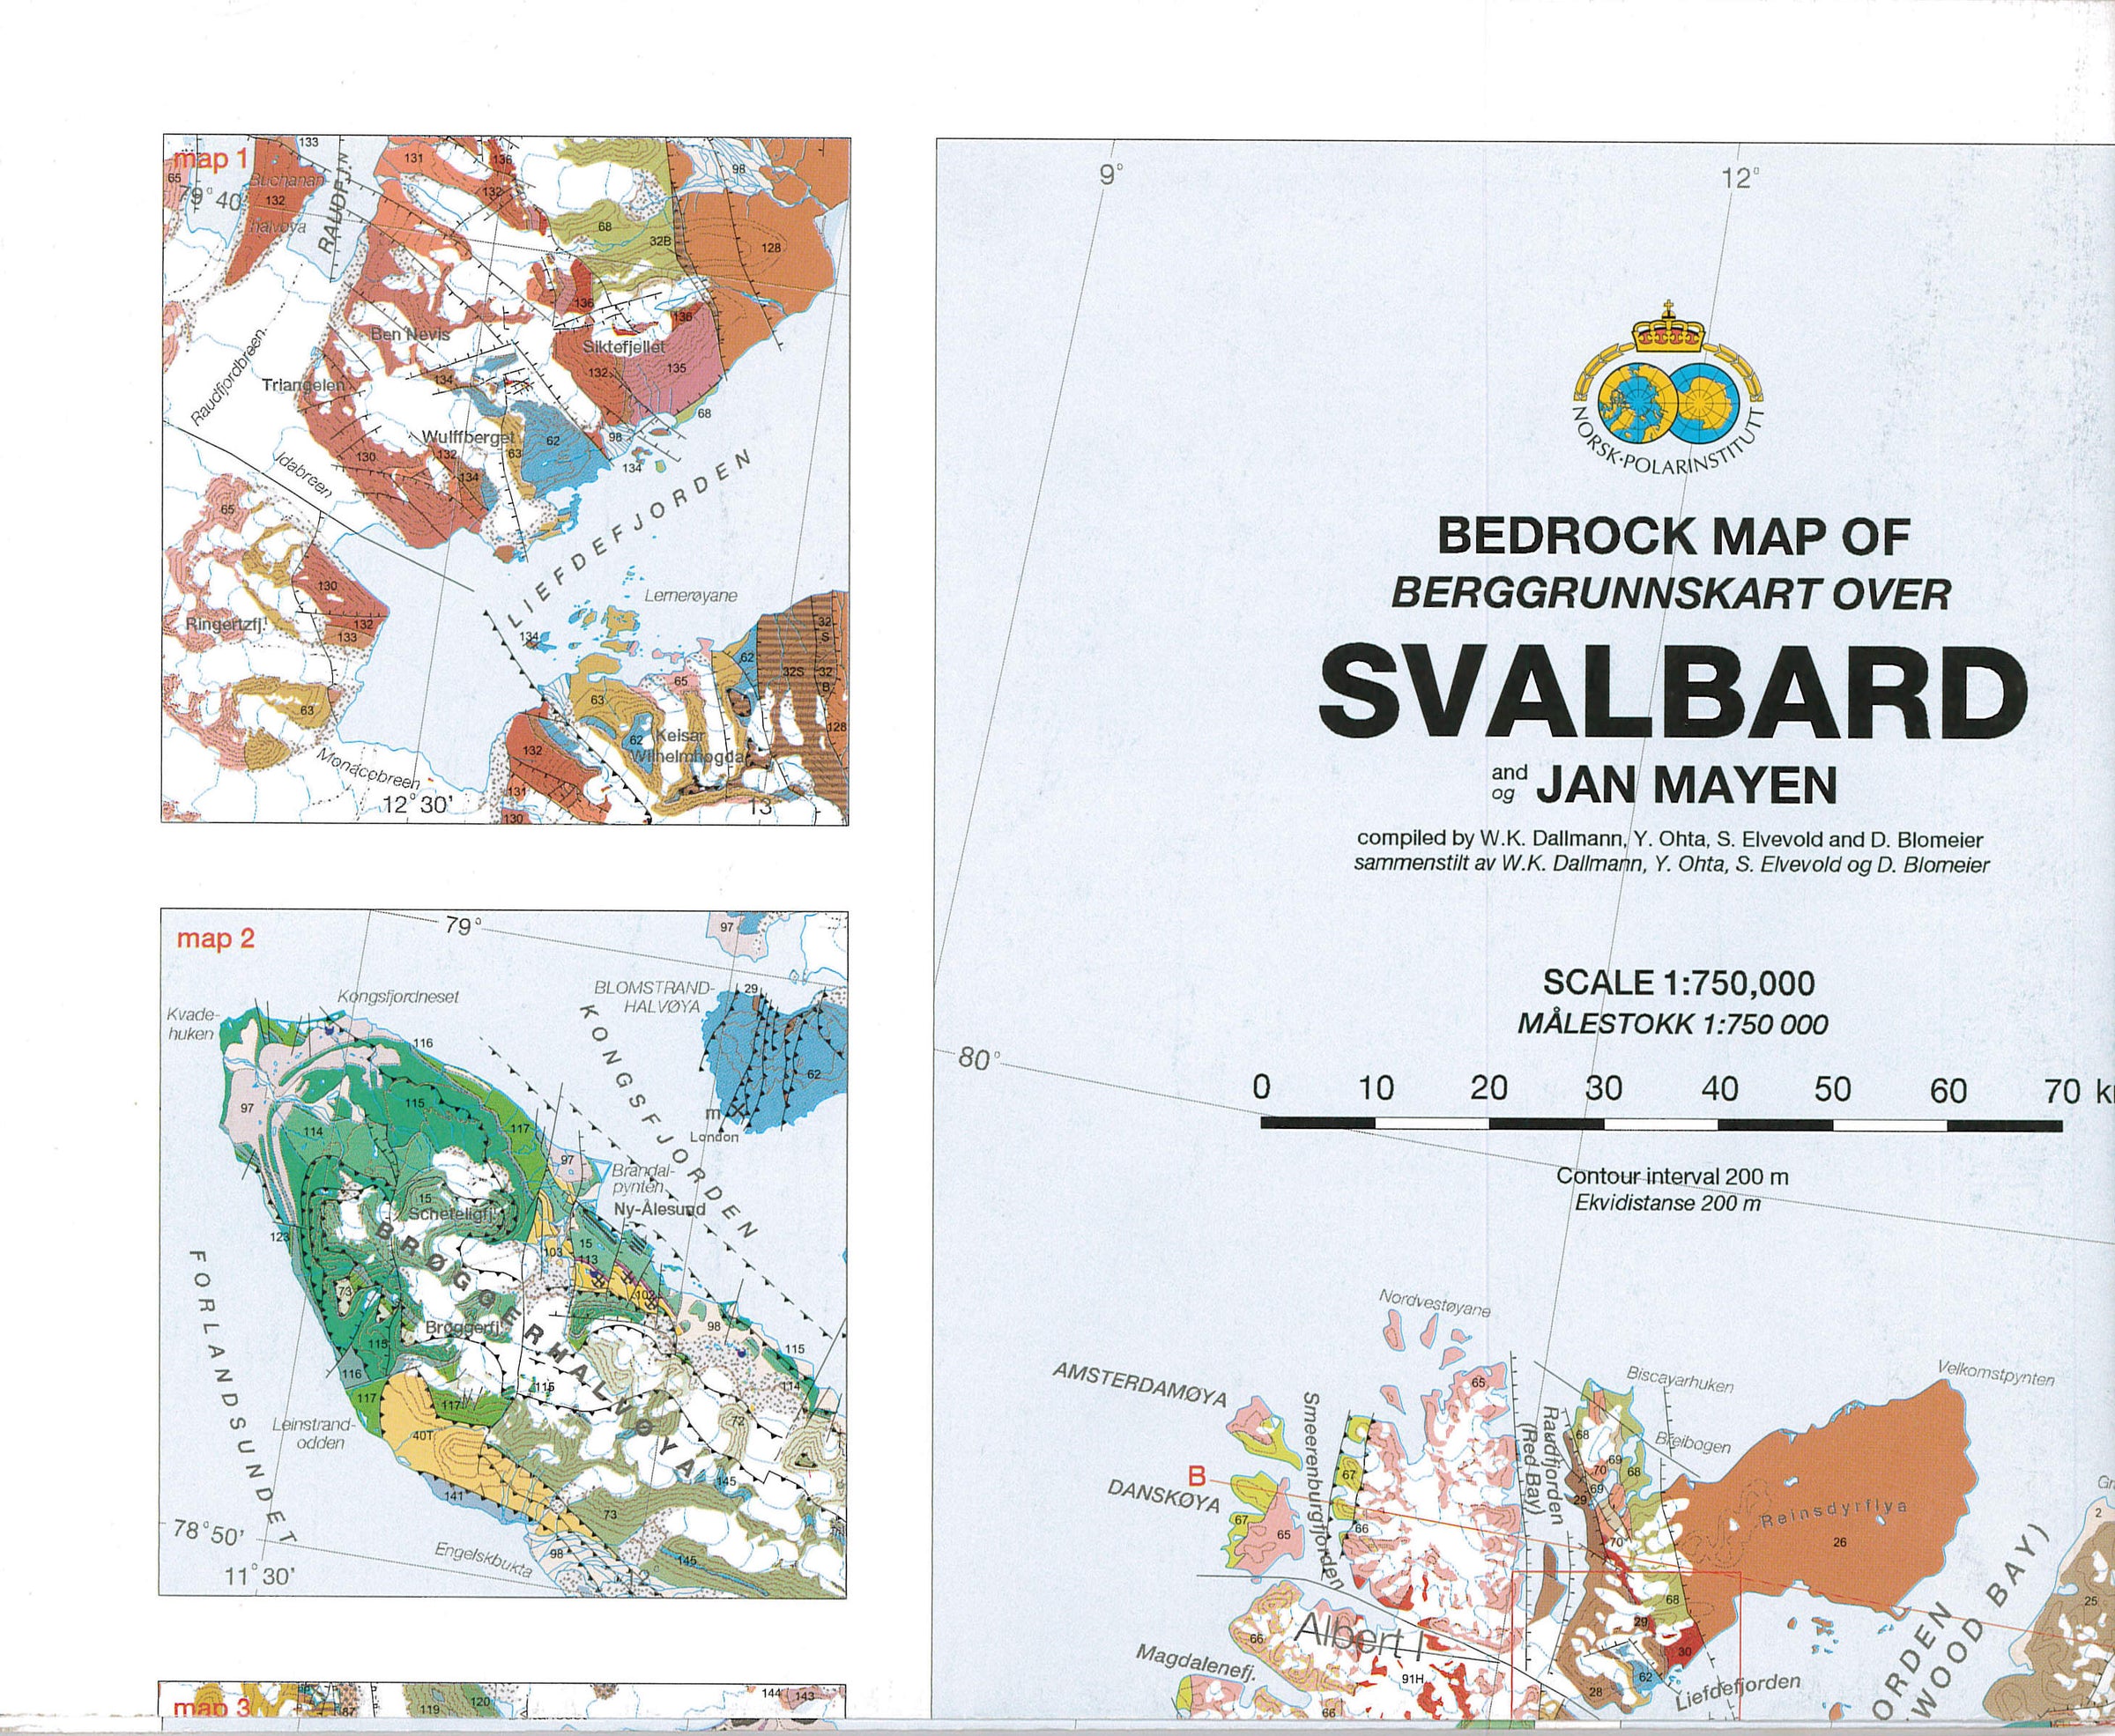 Bedrock Map of Svalbard and Jan Mayen (Berggrunnskart) 1:750,000